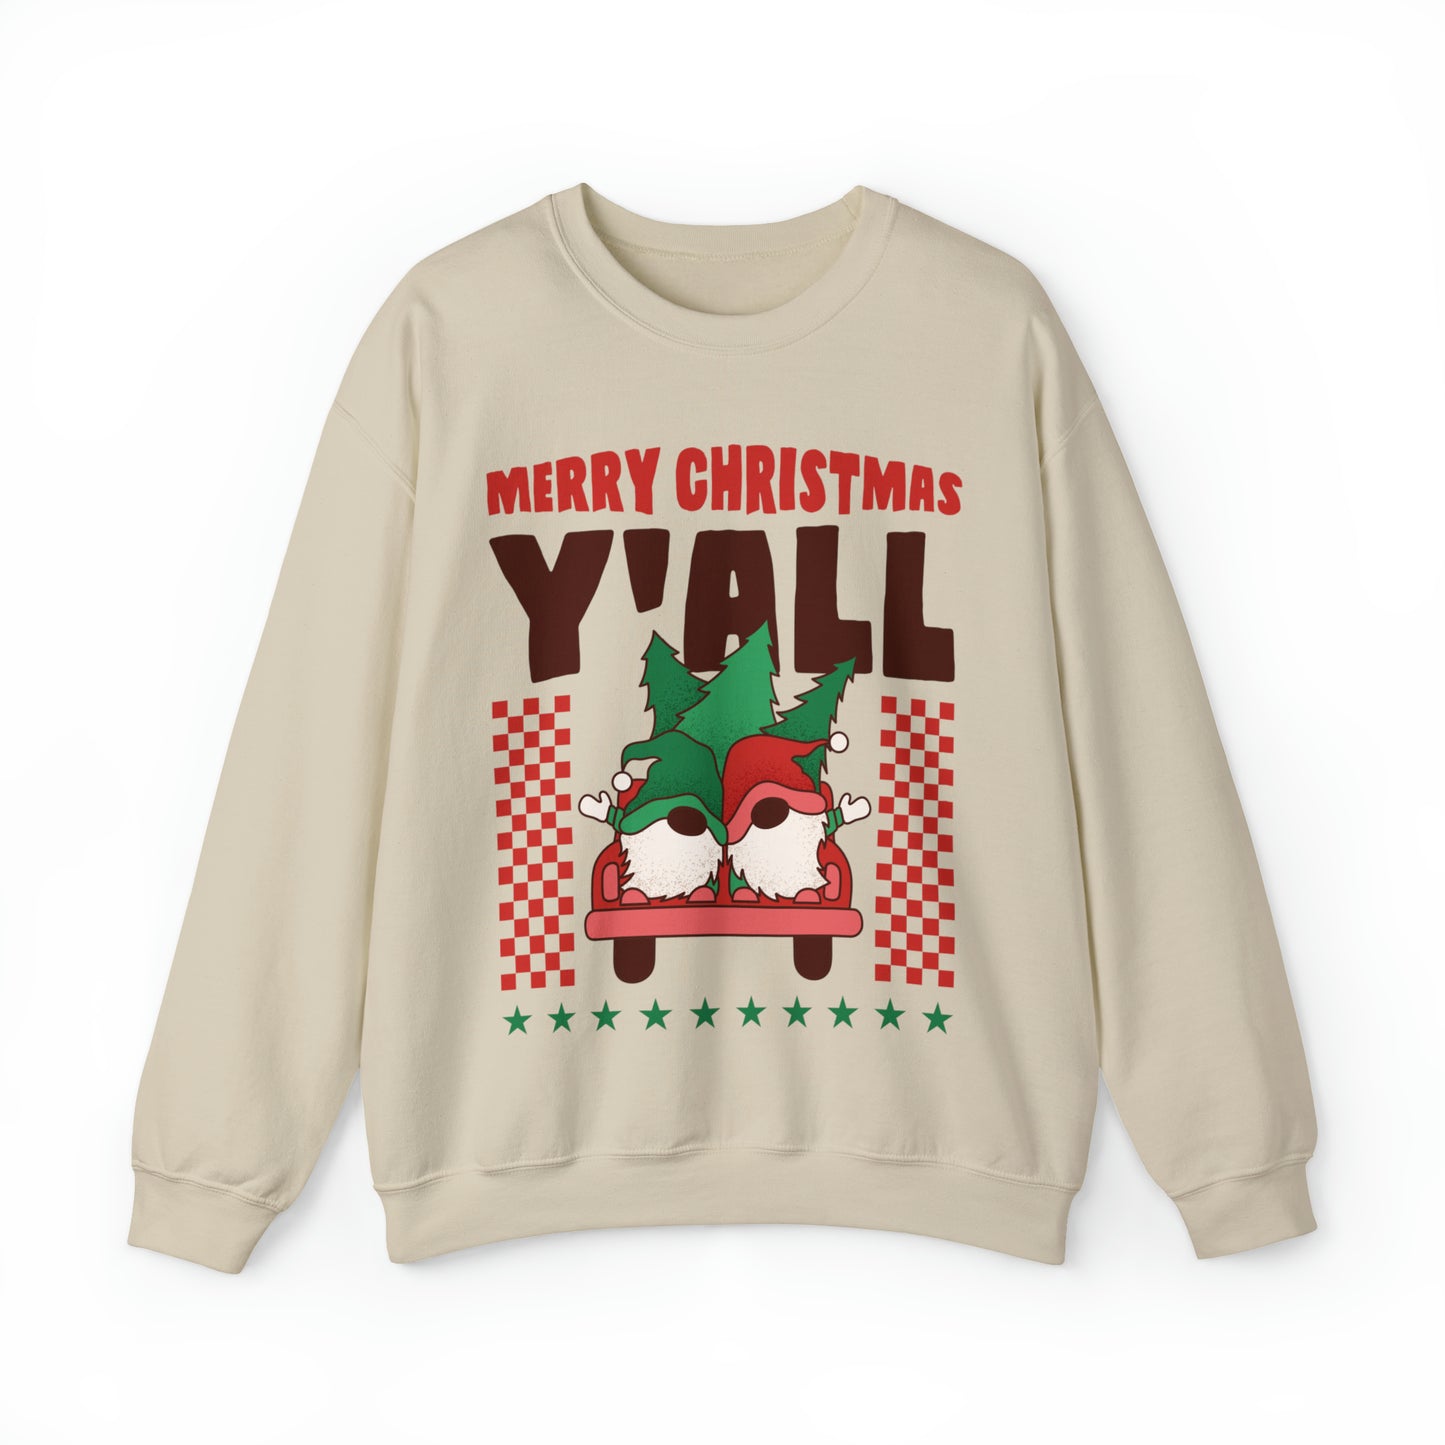 Merry Christmas Y'all Women's Christmas Crewneck Sweatshirt